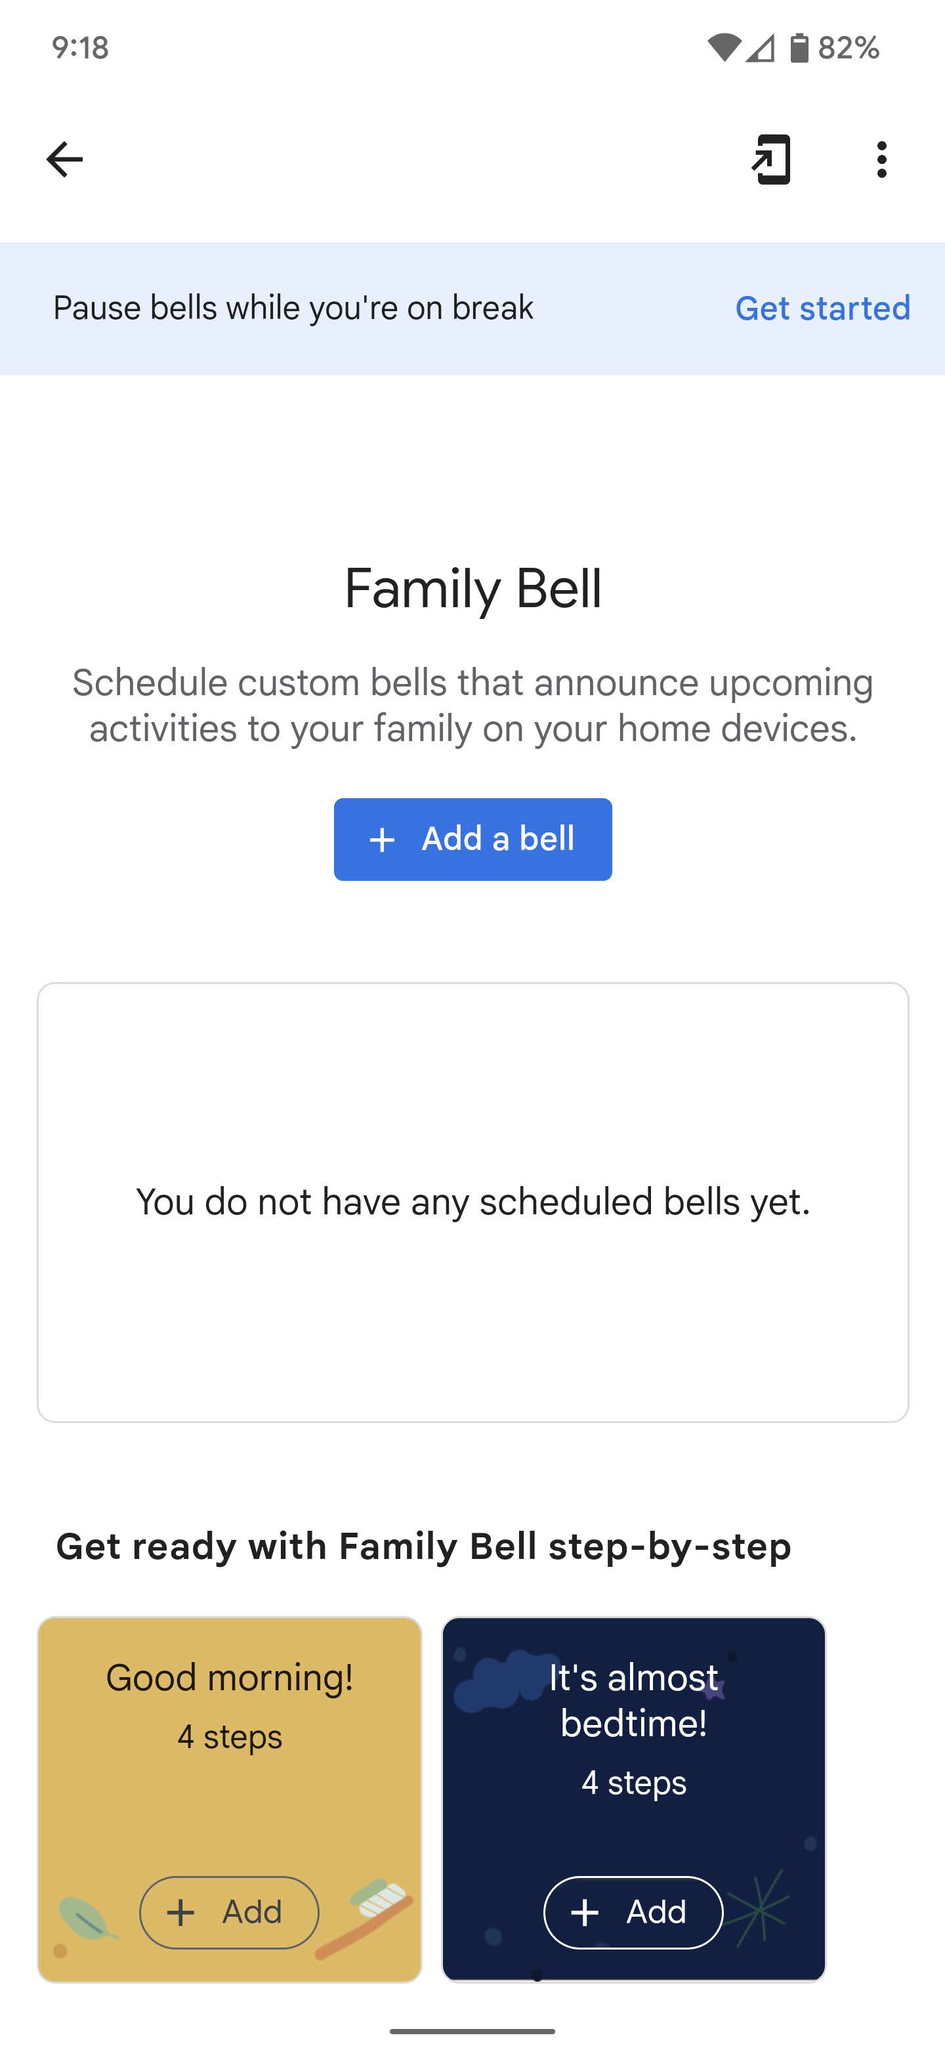 Google Family Bell Screenshot